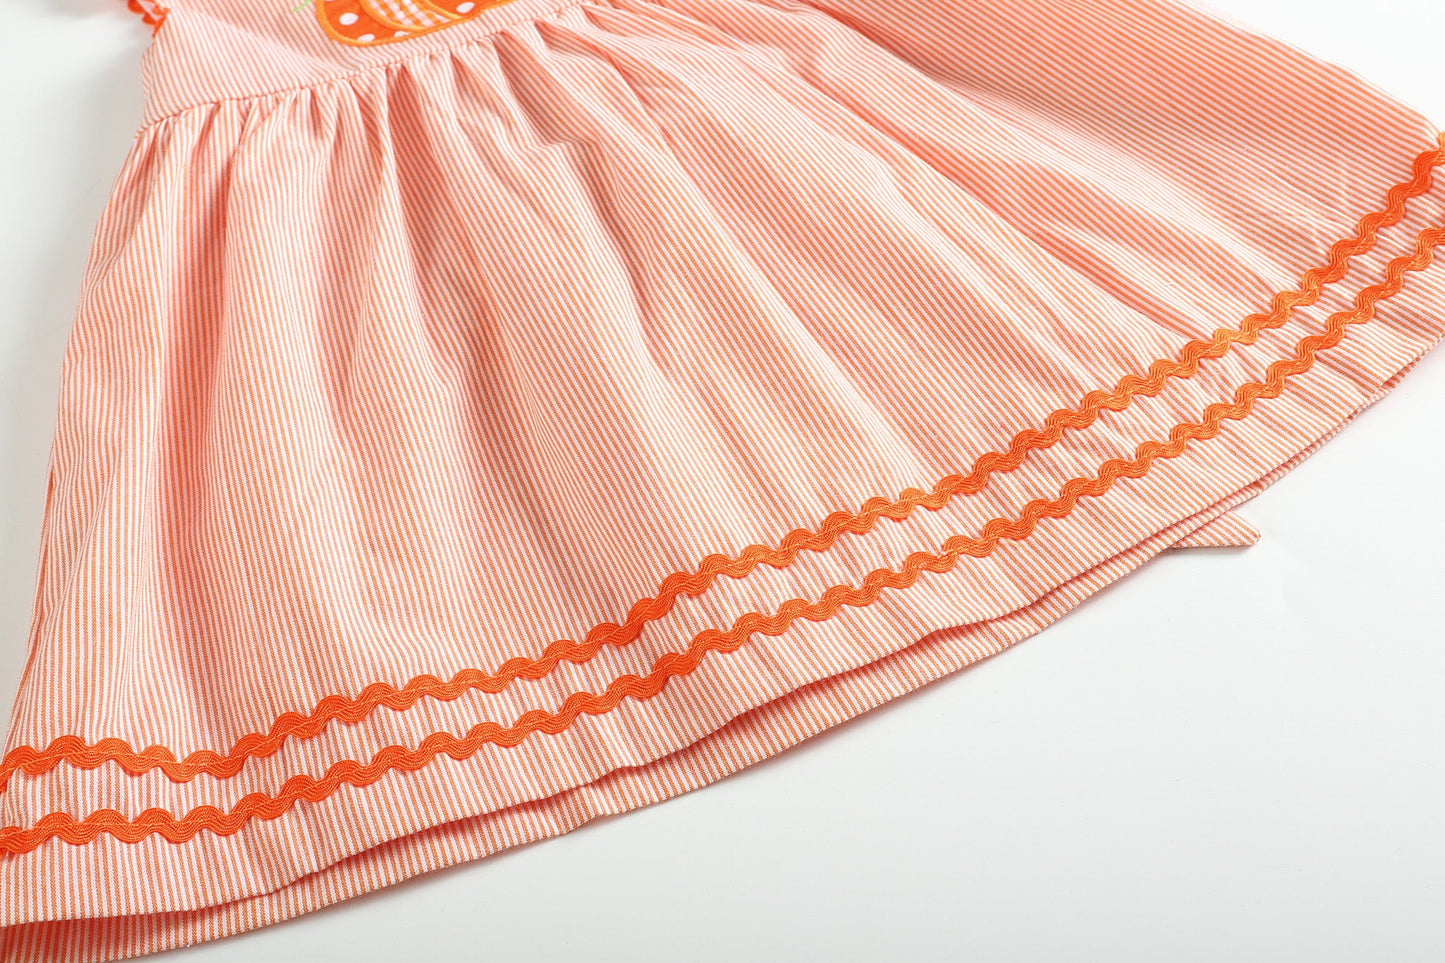 Orange Pinstripe Pumpkin Embroidered A-Line Dress